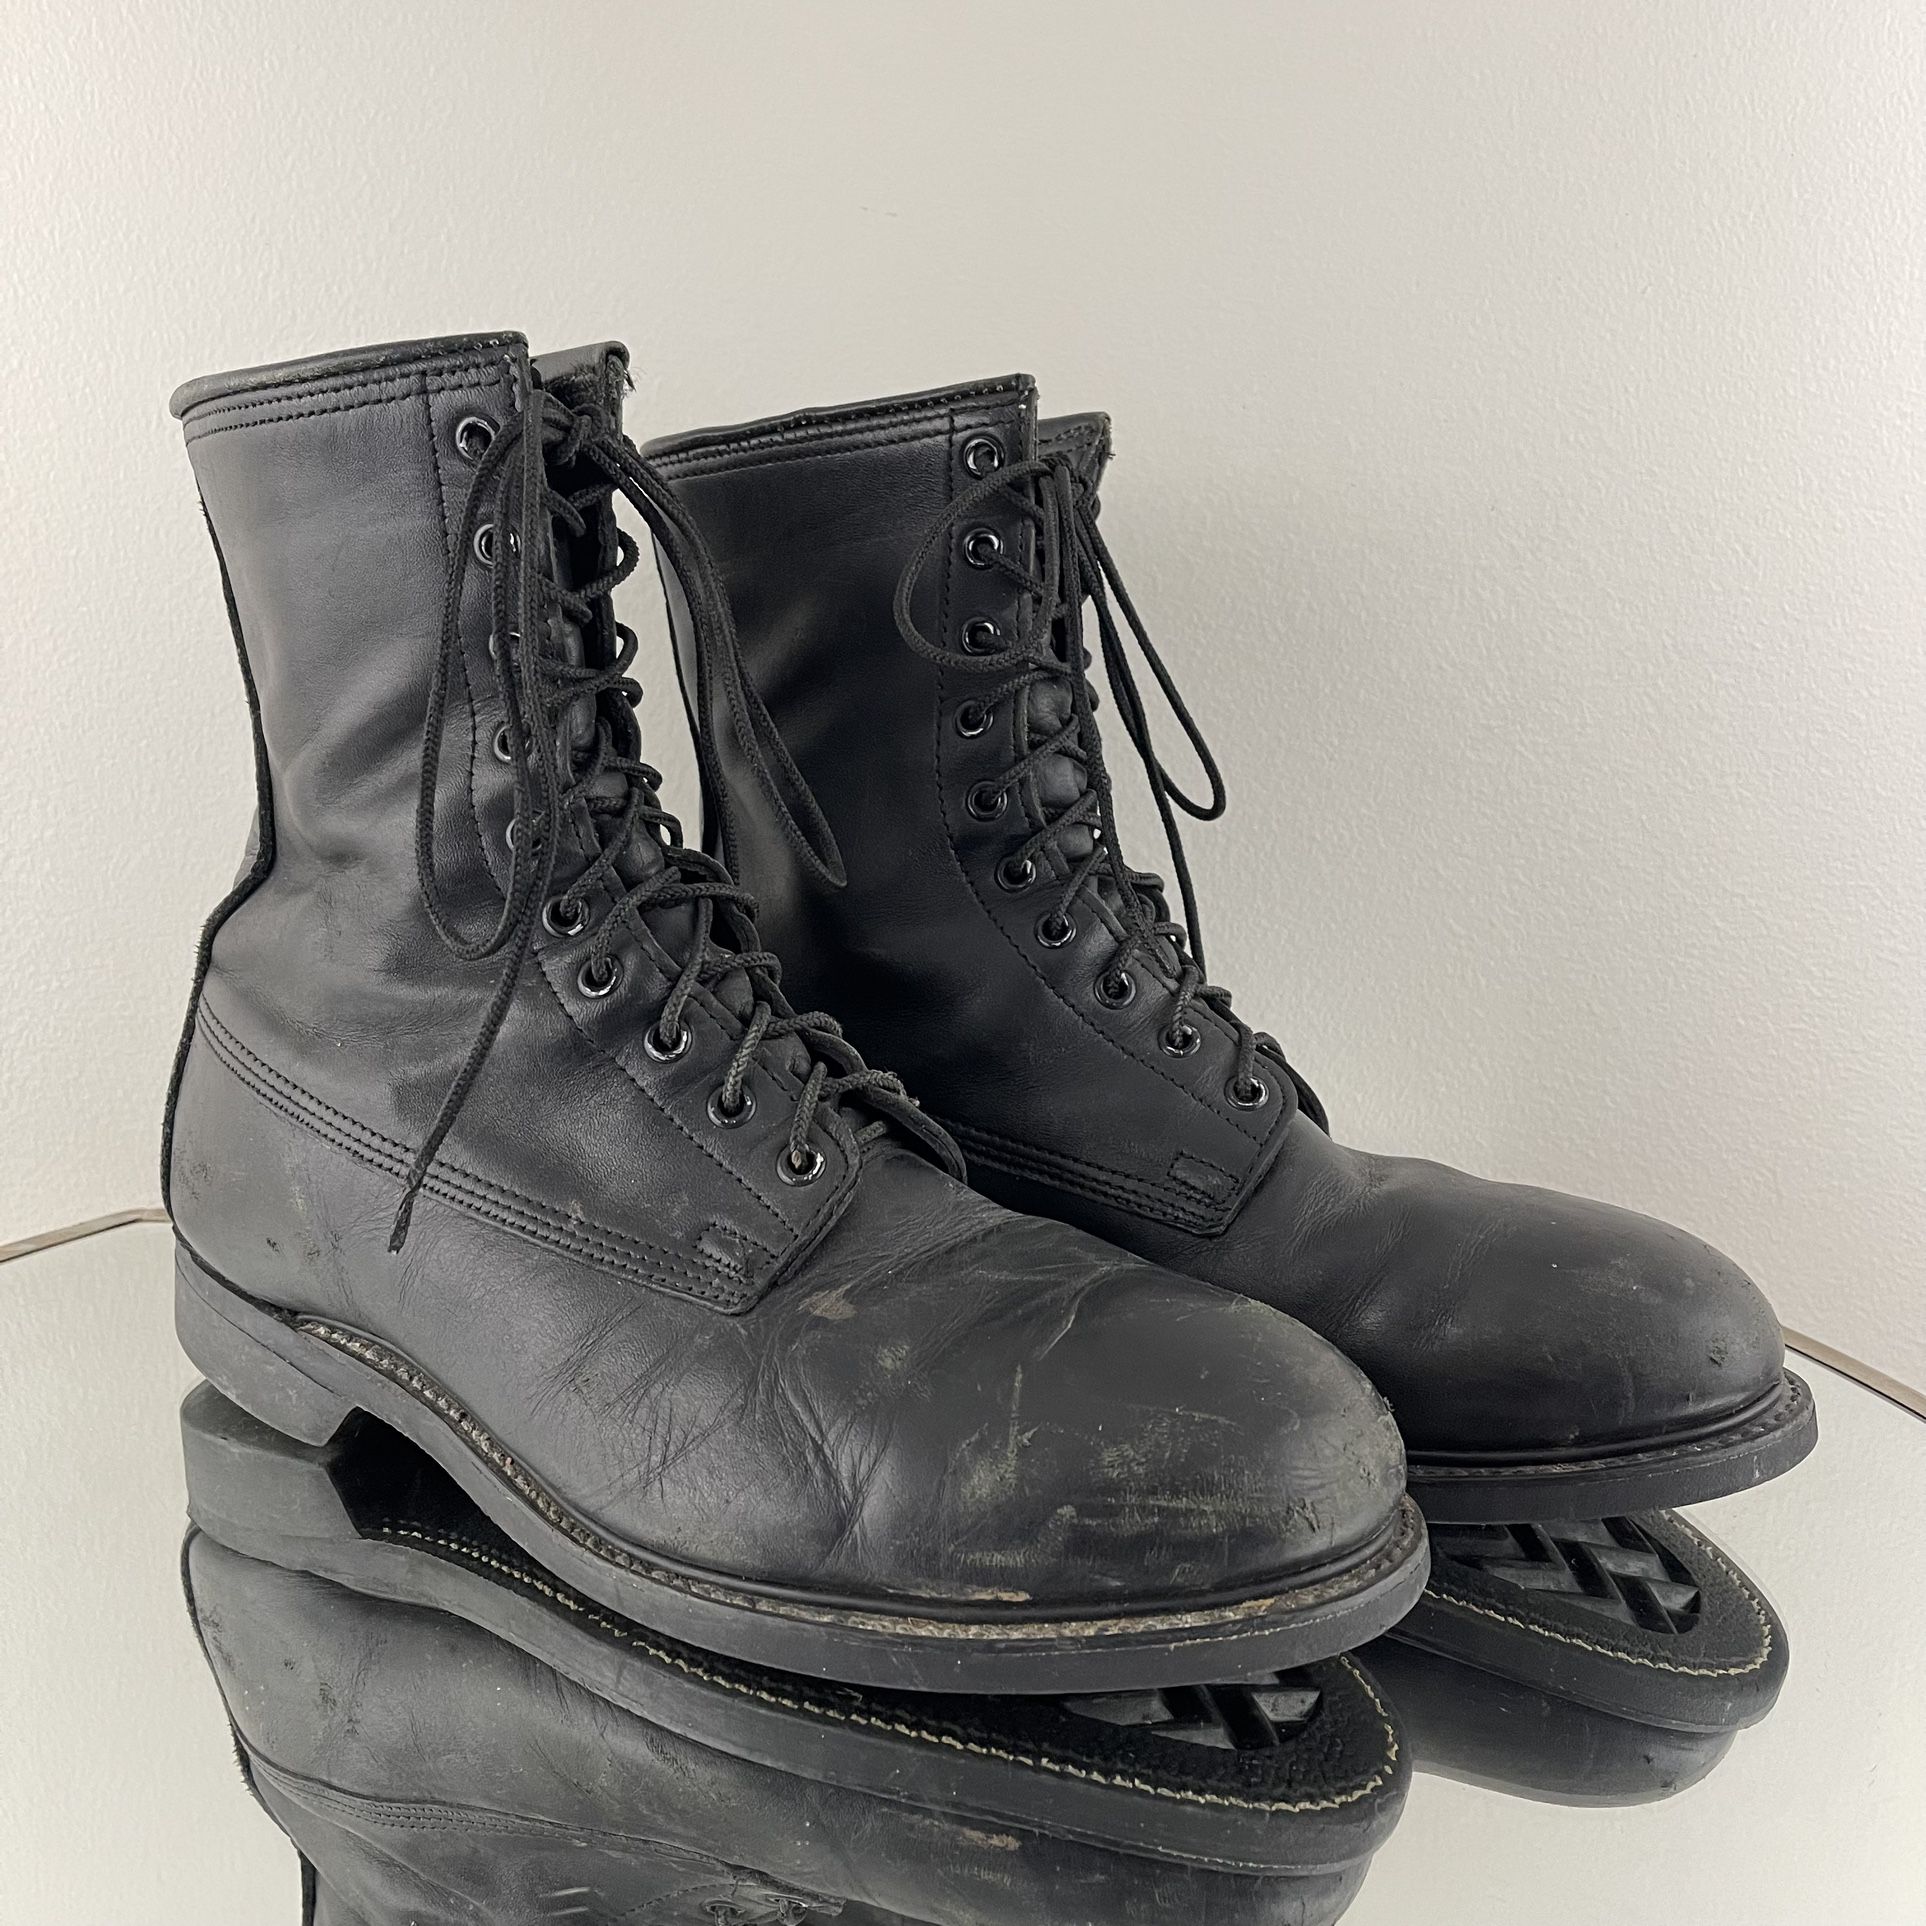 BILTRITE Vintage Black Leather Steel Toe Lace Up Moto Army Combat Boots